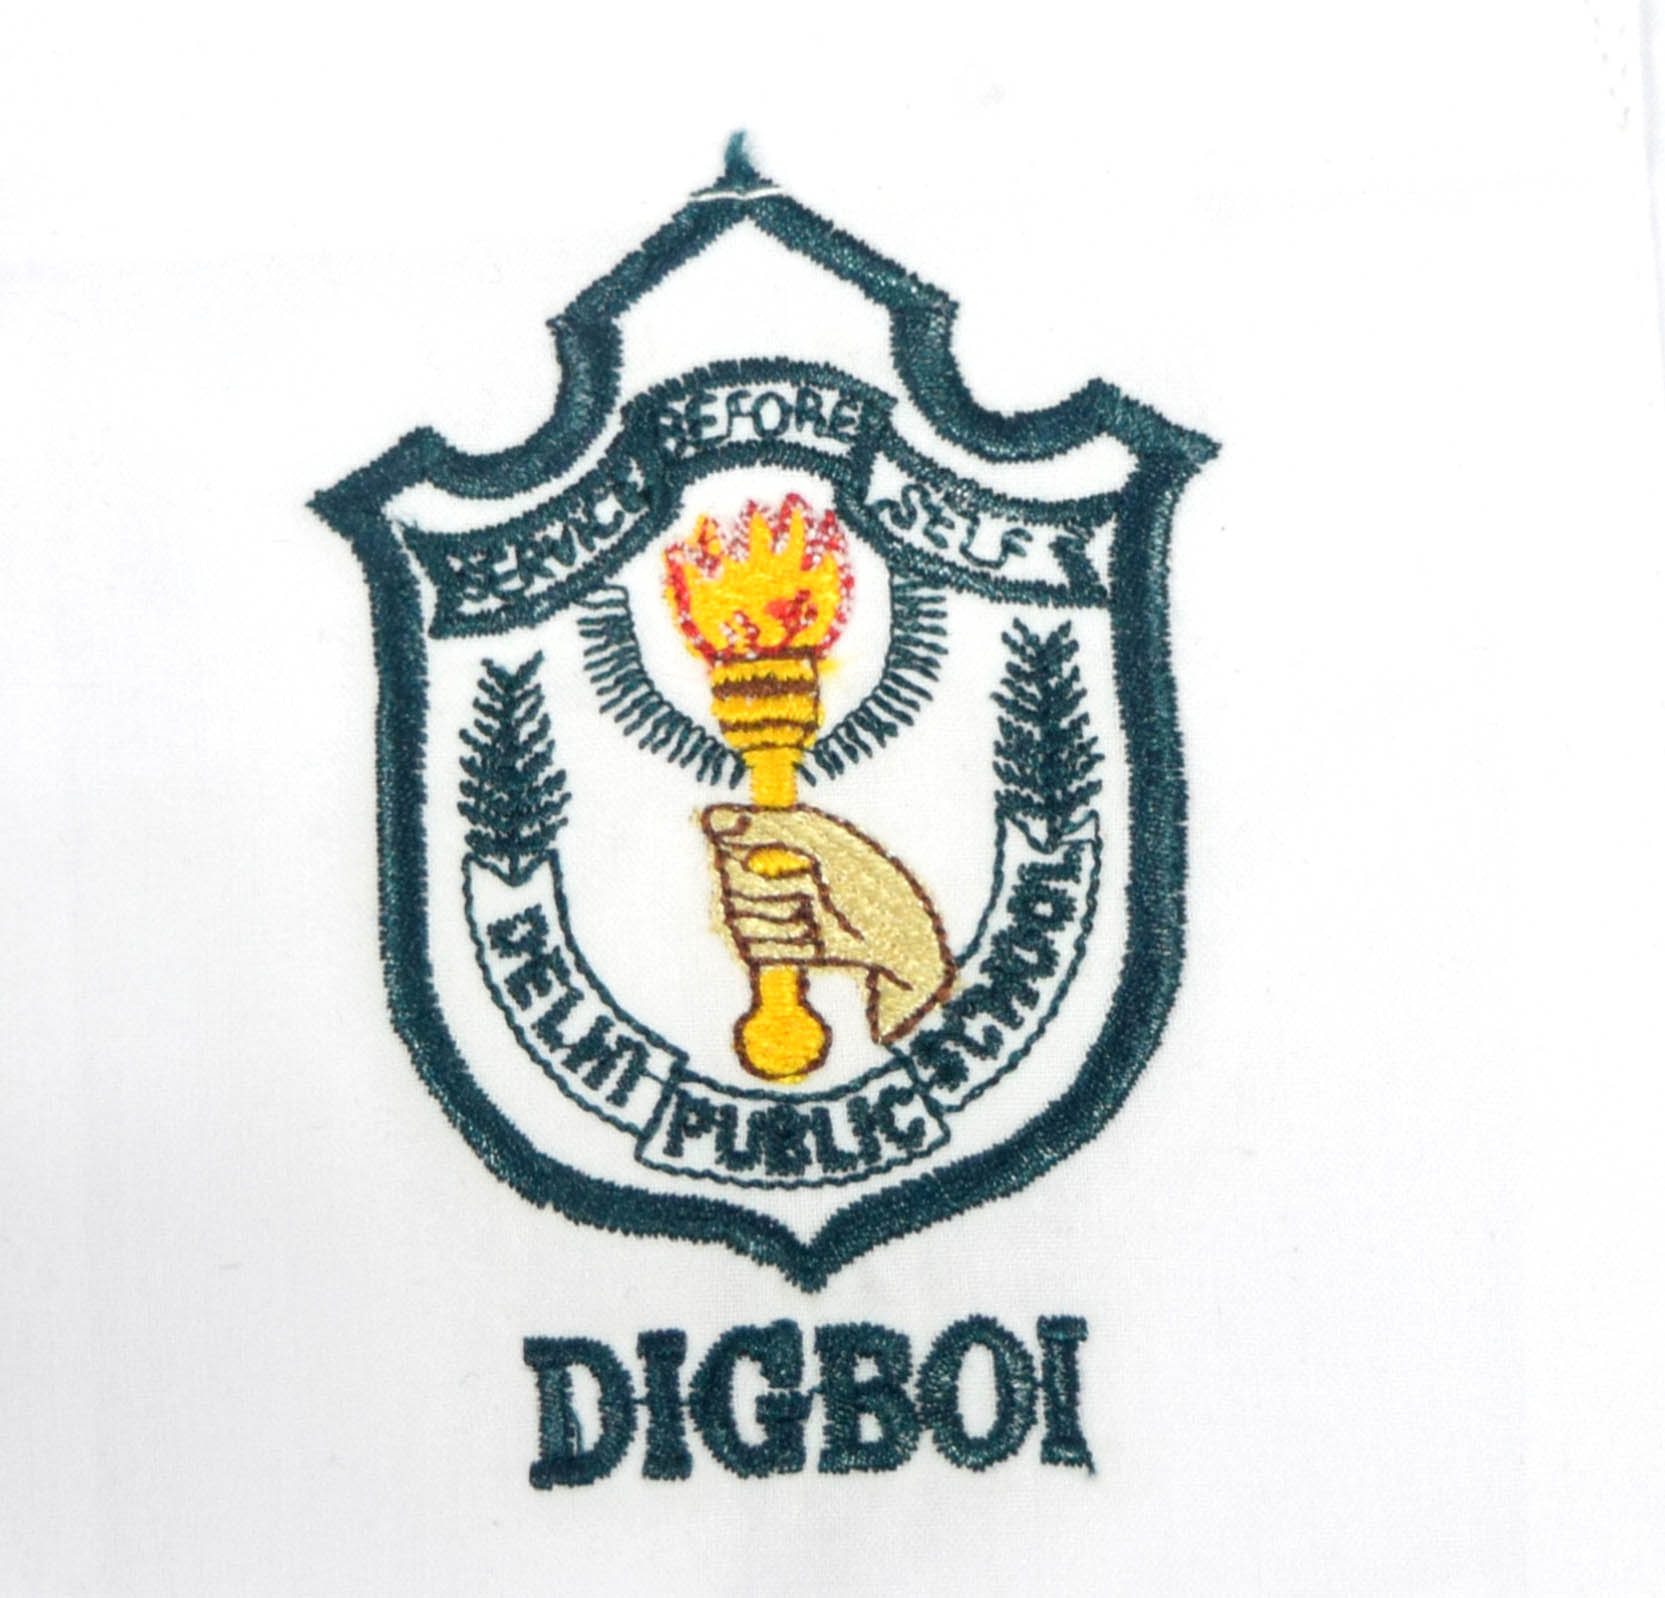 DPS, Digboi